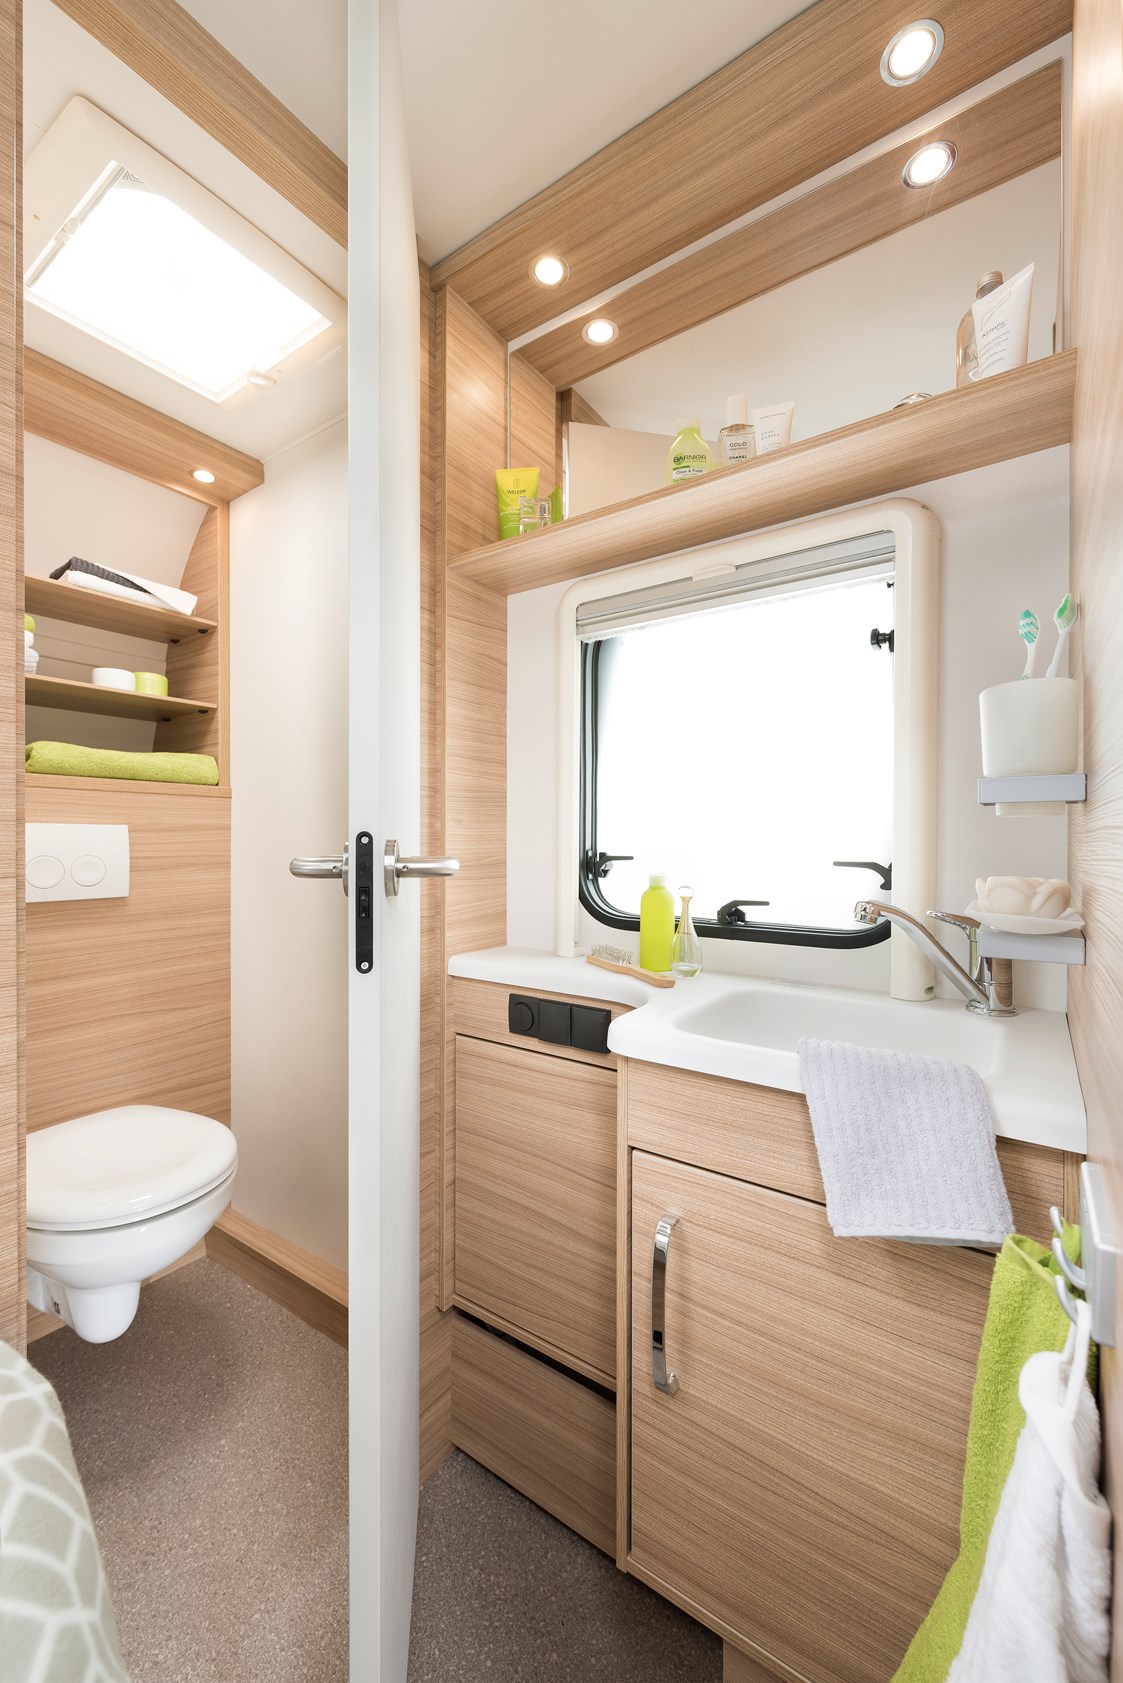 Glampingunterkunft: Spül WC im Caravan - Glamping Caravan am Campingplatz Wackerballig